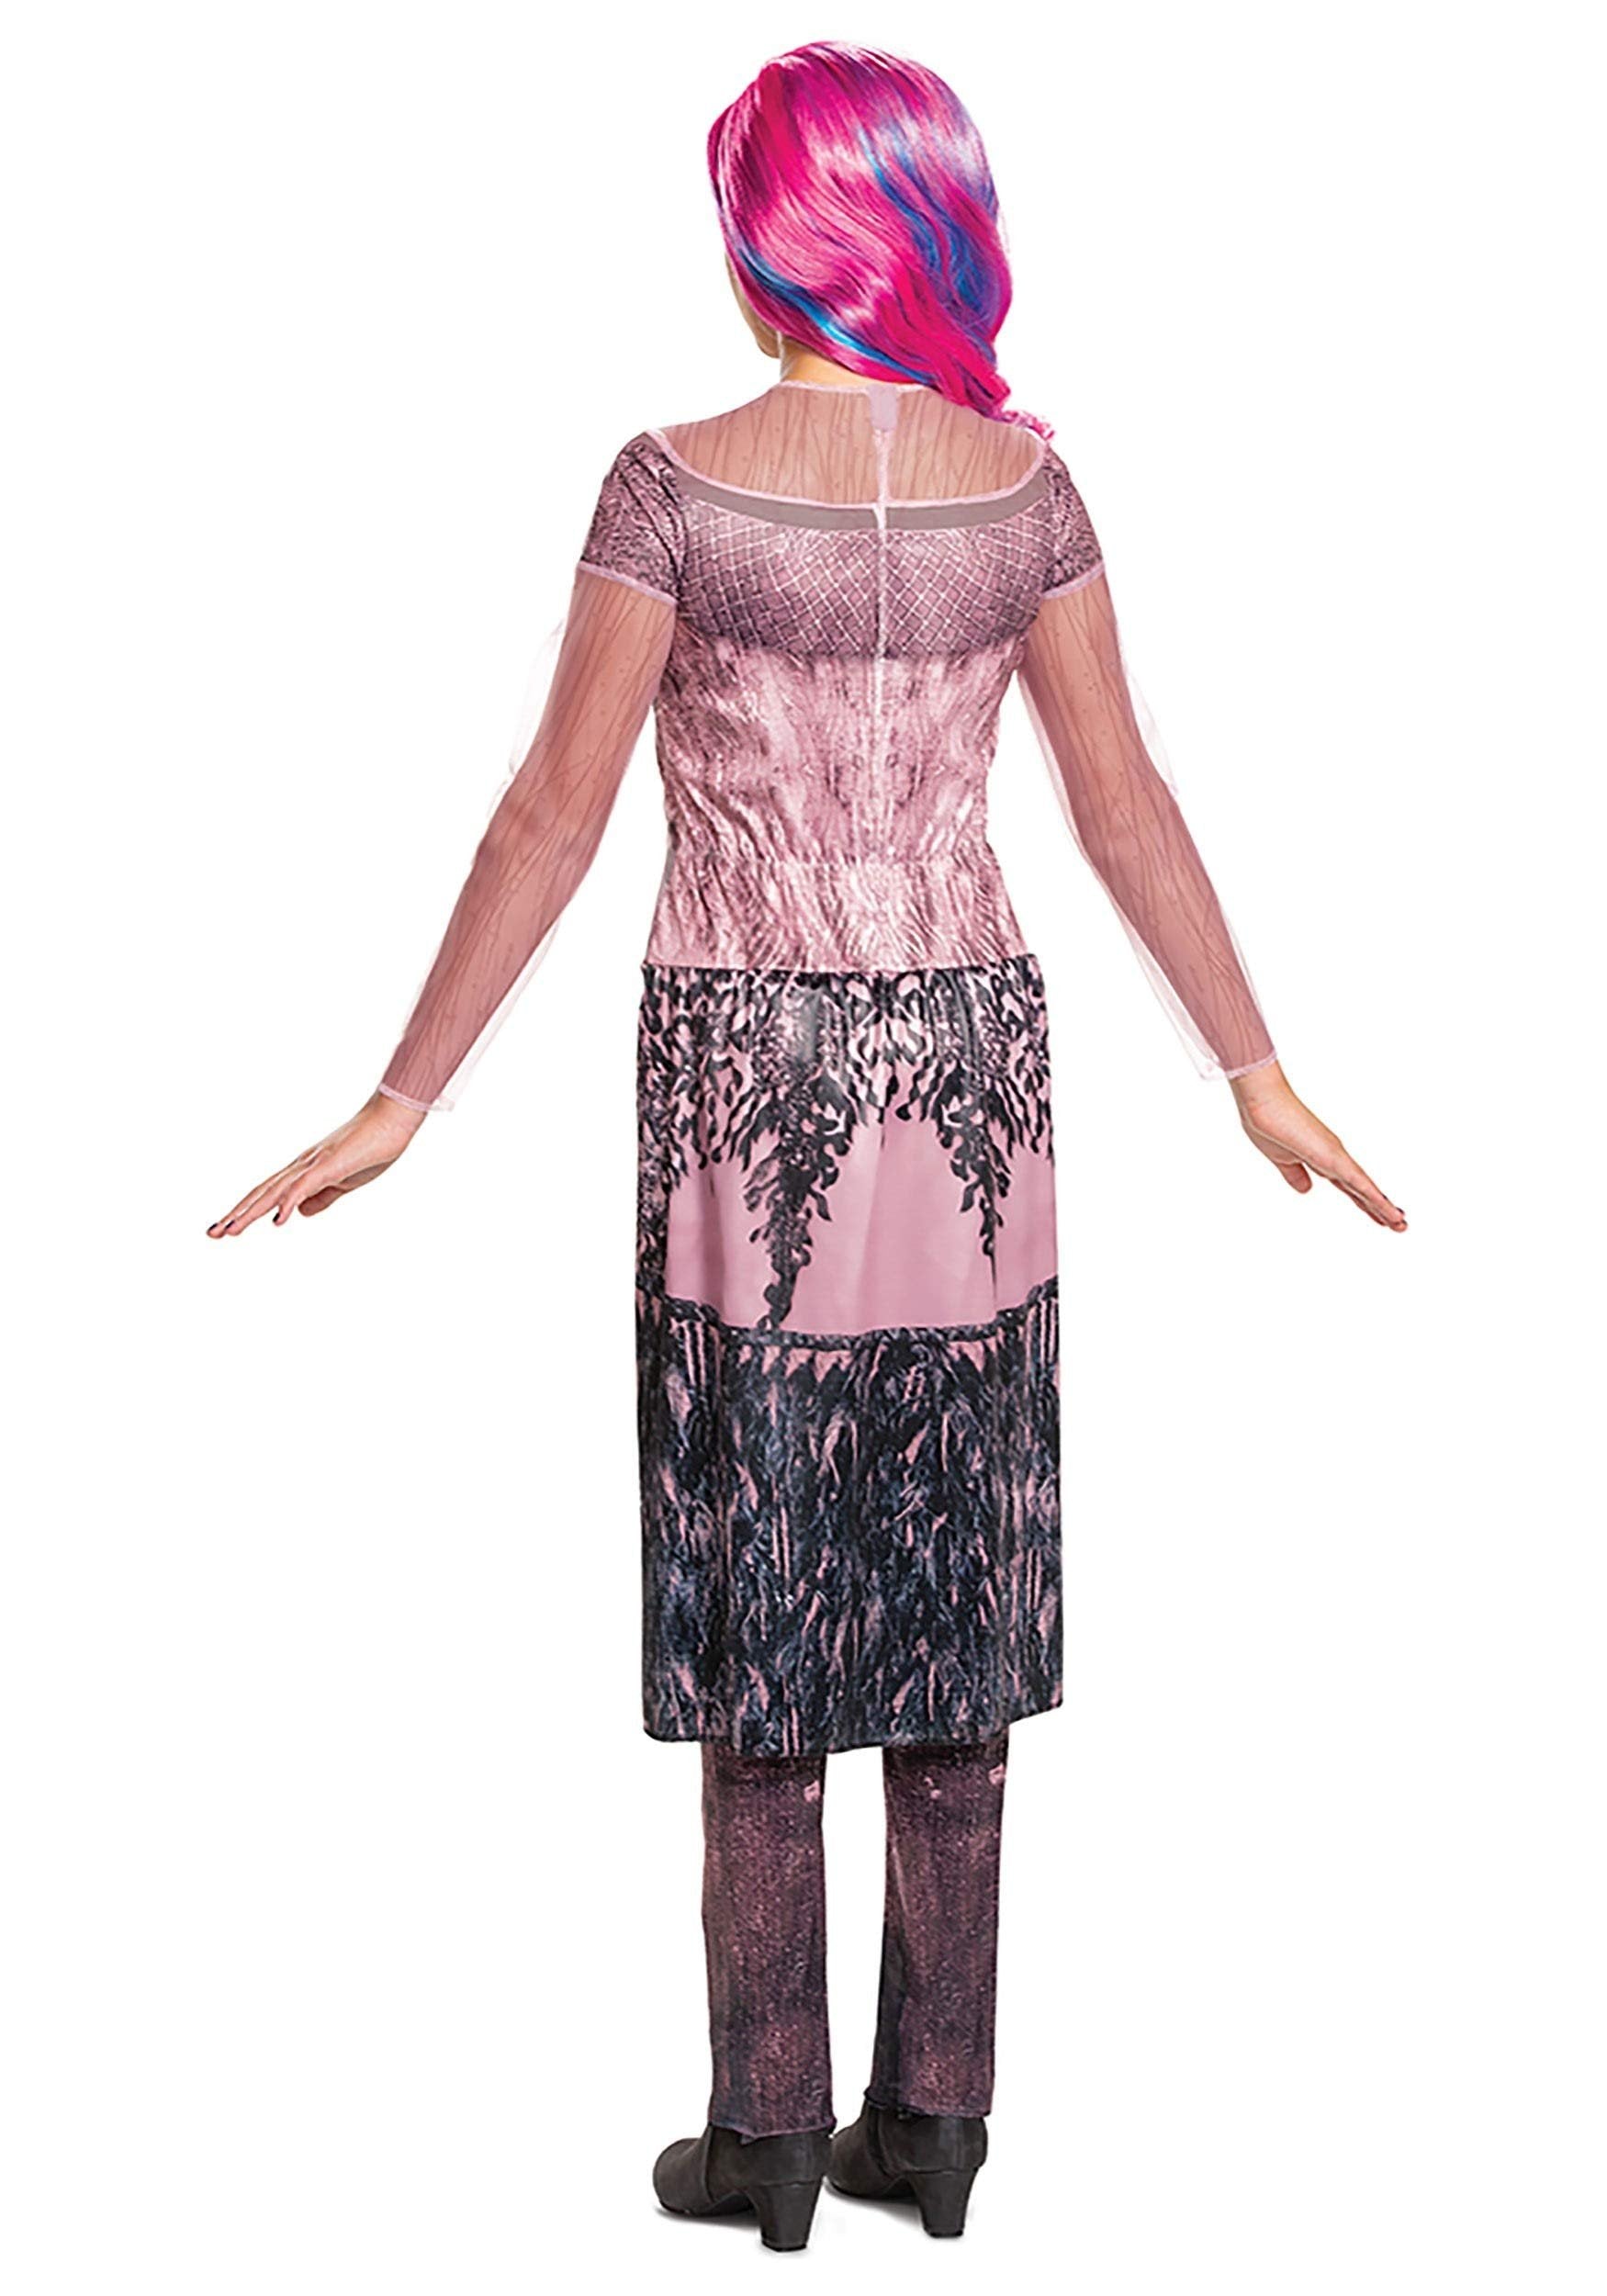 Disguise Audrey Descendants 3 Costume - Girls' Medium (7-8) - Pink - Free Shipping & Returns